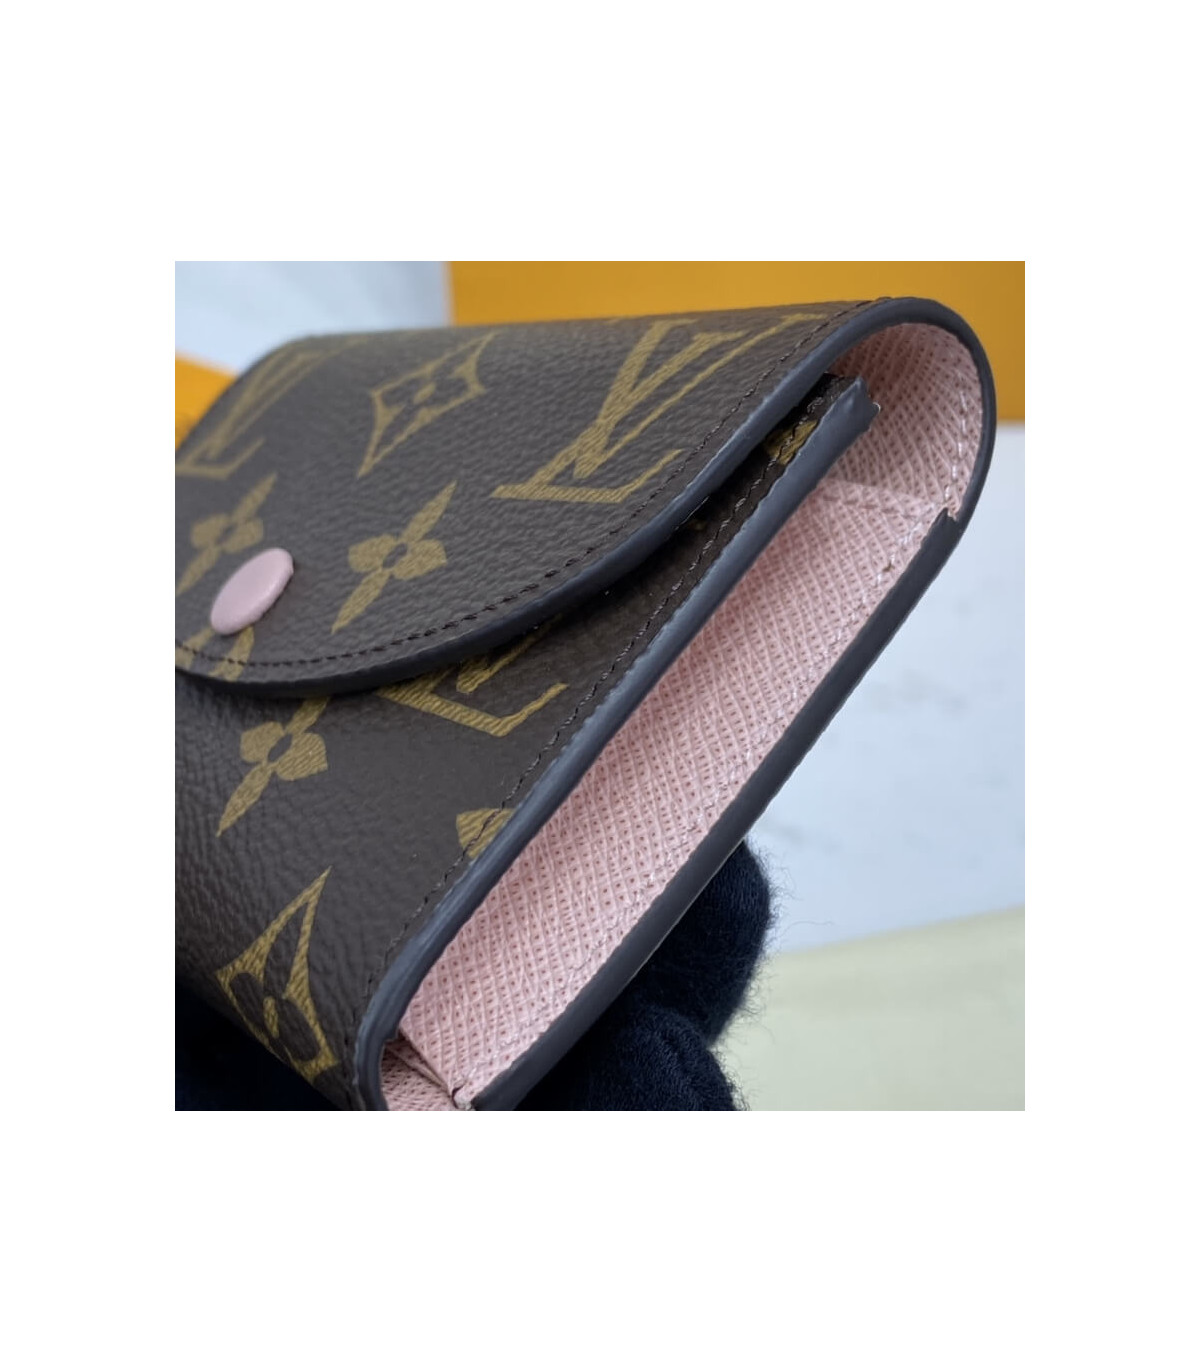 Shop Louis Vuitton MONOGRAM 2022-23FW Rosalie coin purse (M62361, M41939)  by Materialgirl